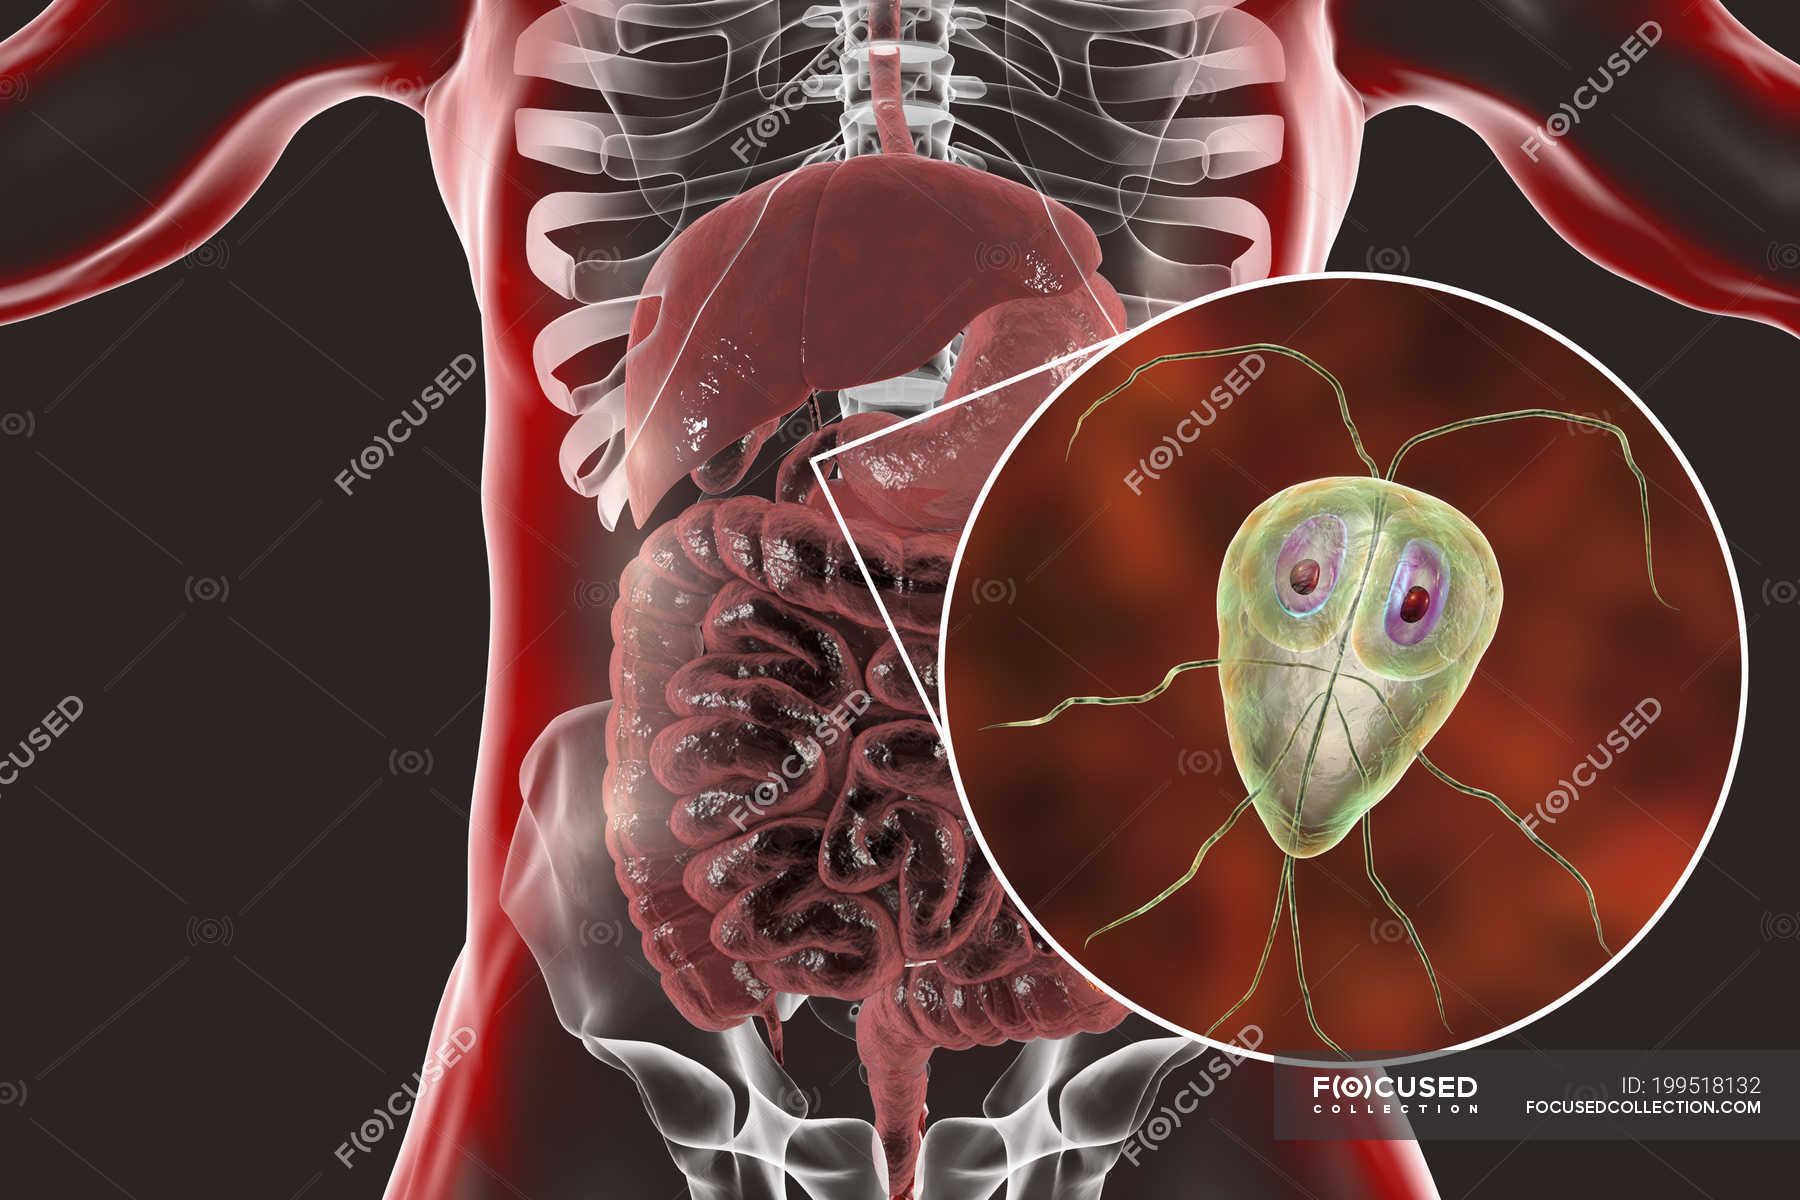 Giardia Lamblia Single Celled Protozoan Parasite In Human Duodenum Digital Artwork Medicine